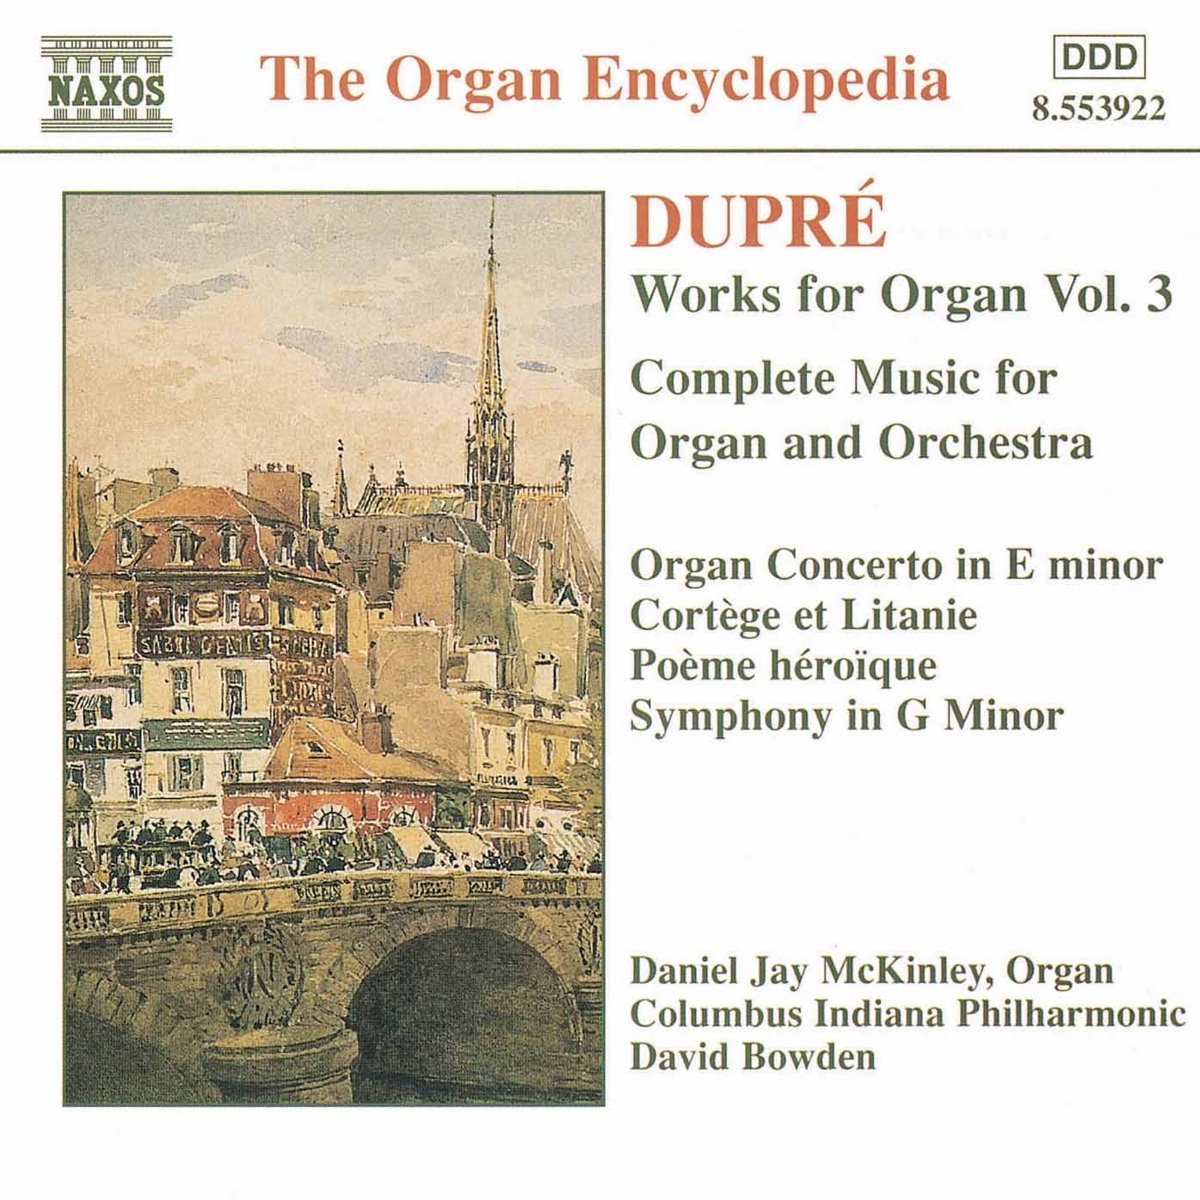 DUPRE: Works for Organ vol. 3